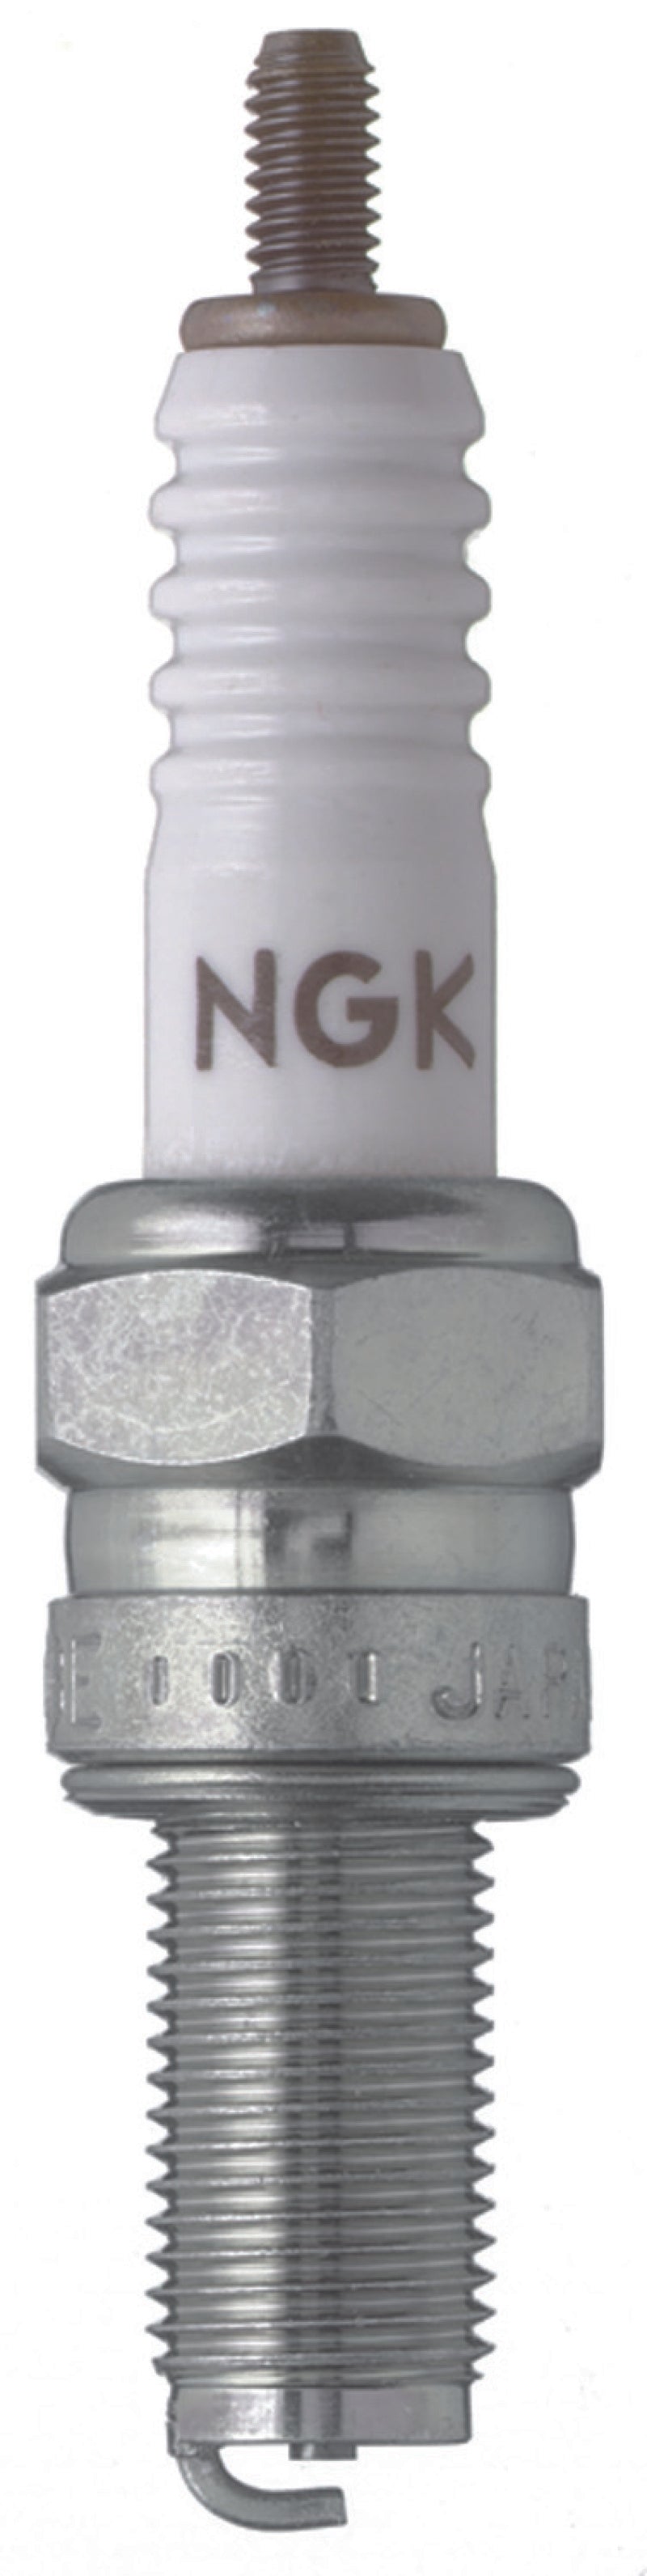 NGK Standard Spark Plug Box of 4 (C9E) -  Shop now at Performance Car Parts